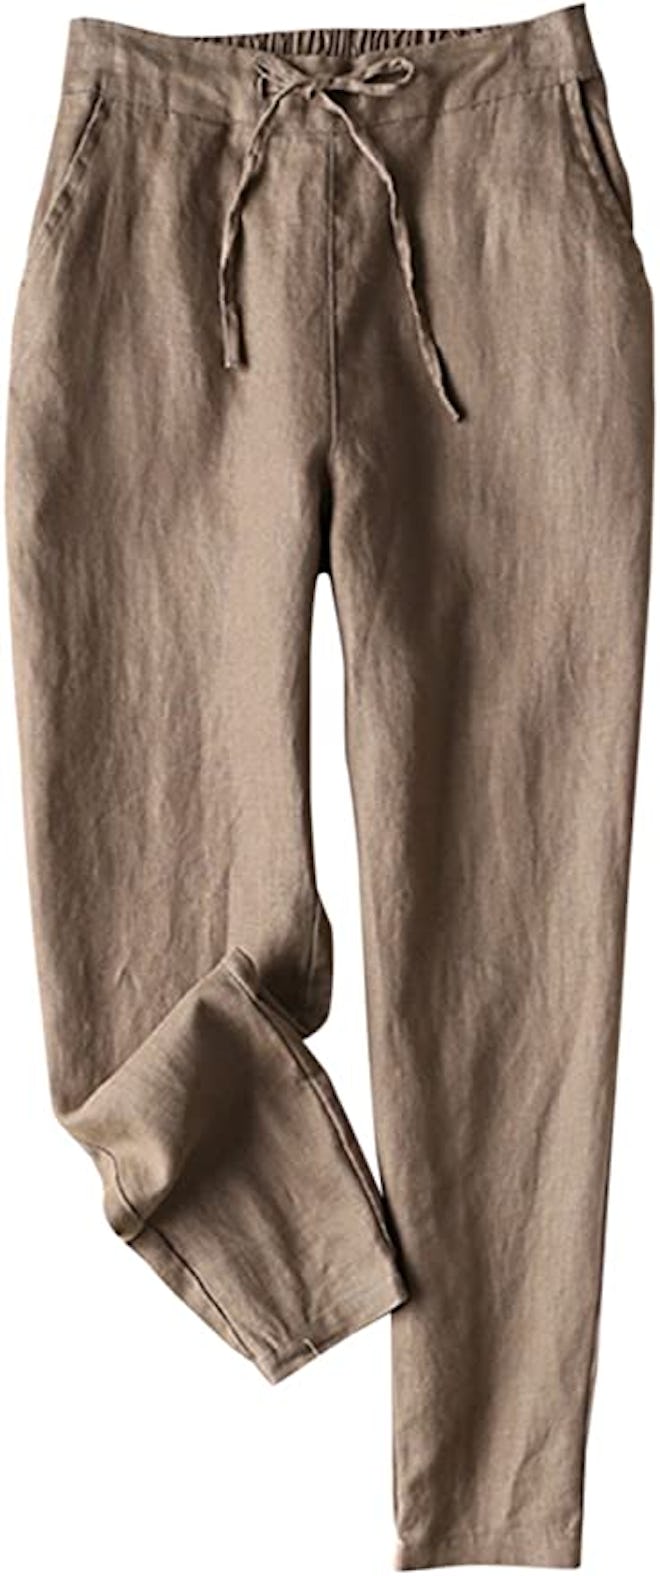 IXIMO 100% Linen Drawstring Pants